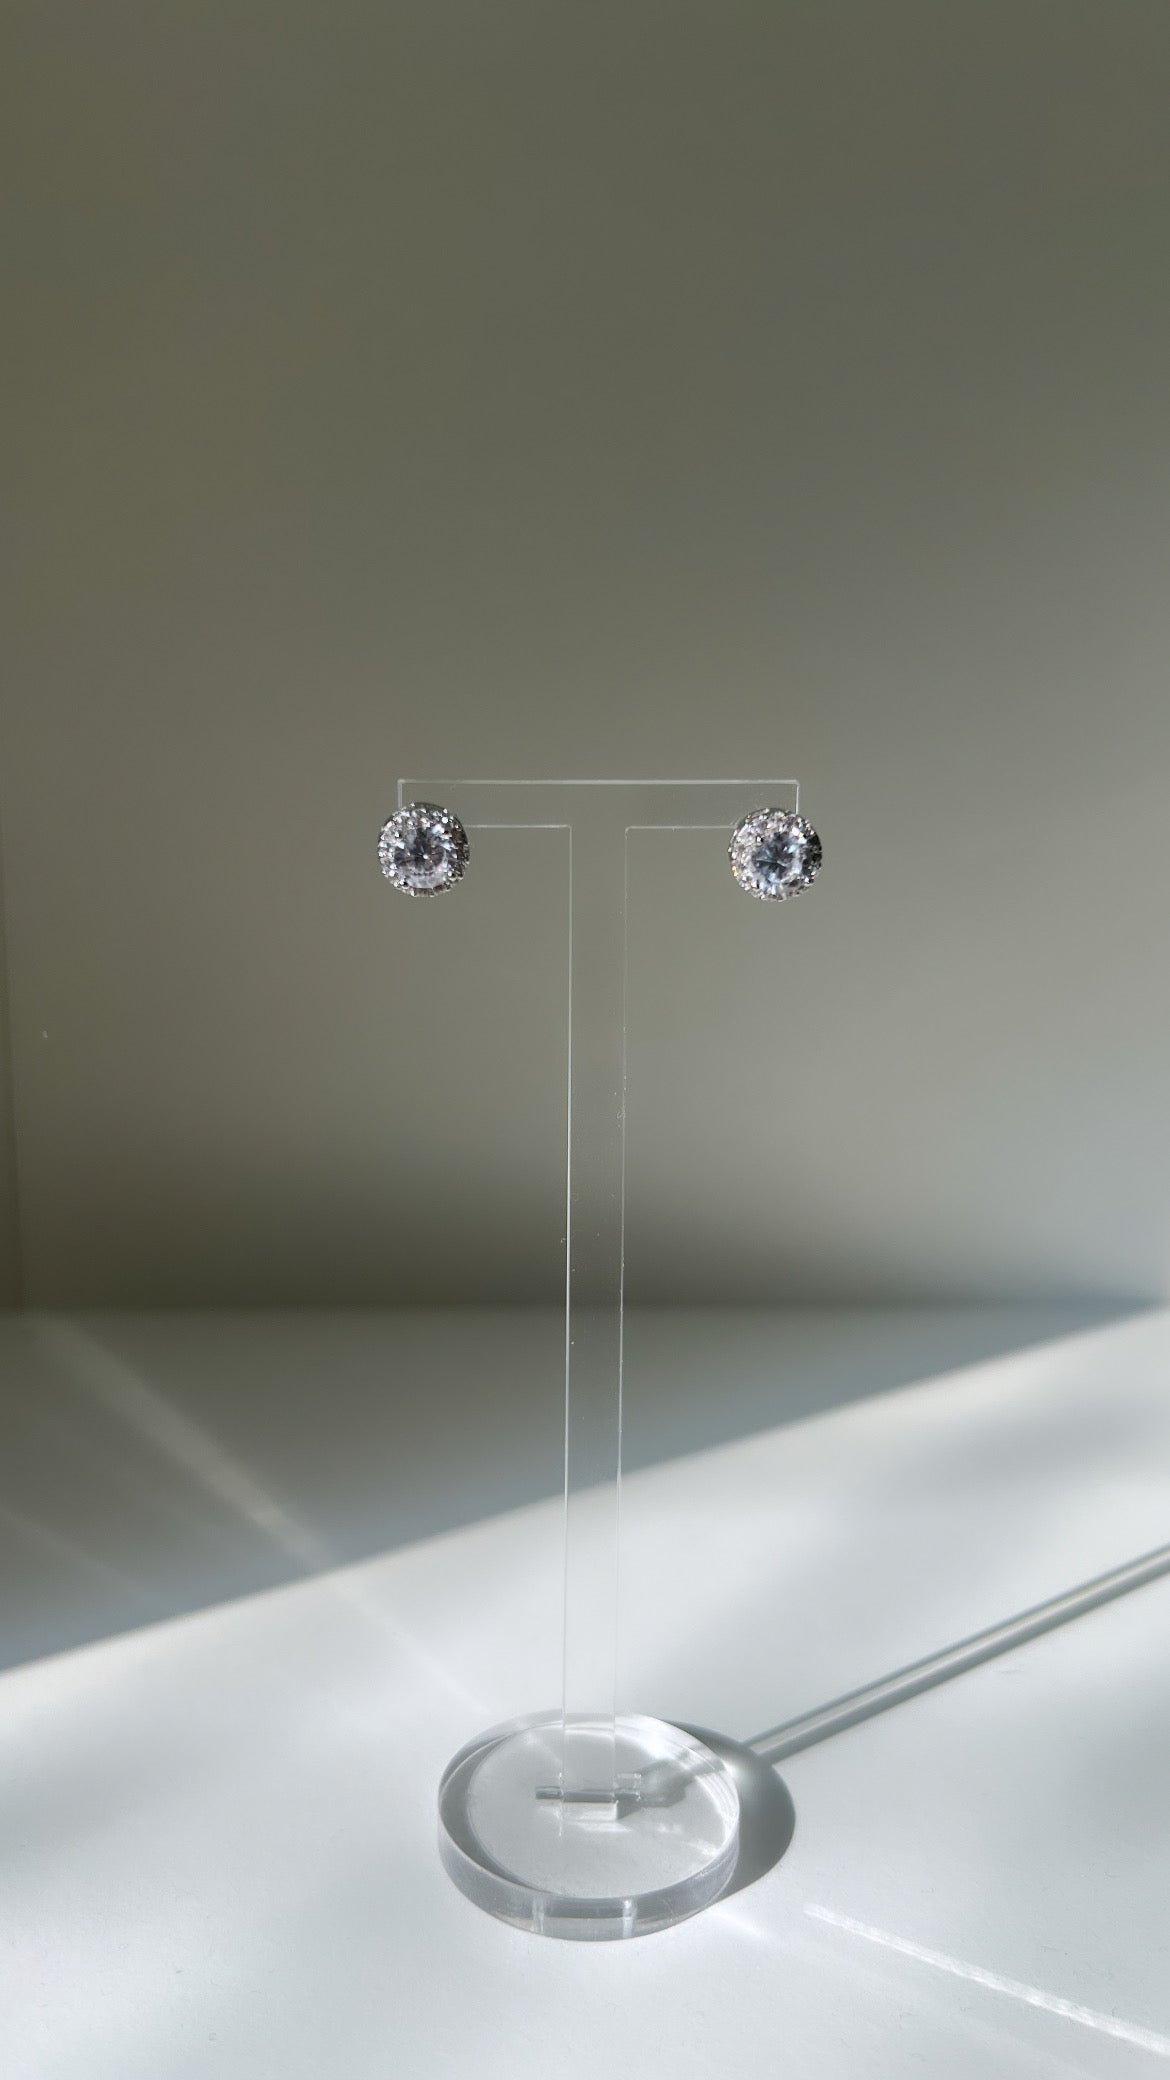 Shiny Tiffany round stud earrings with sparkling gemstone